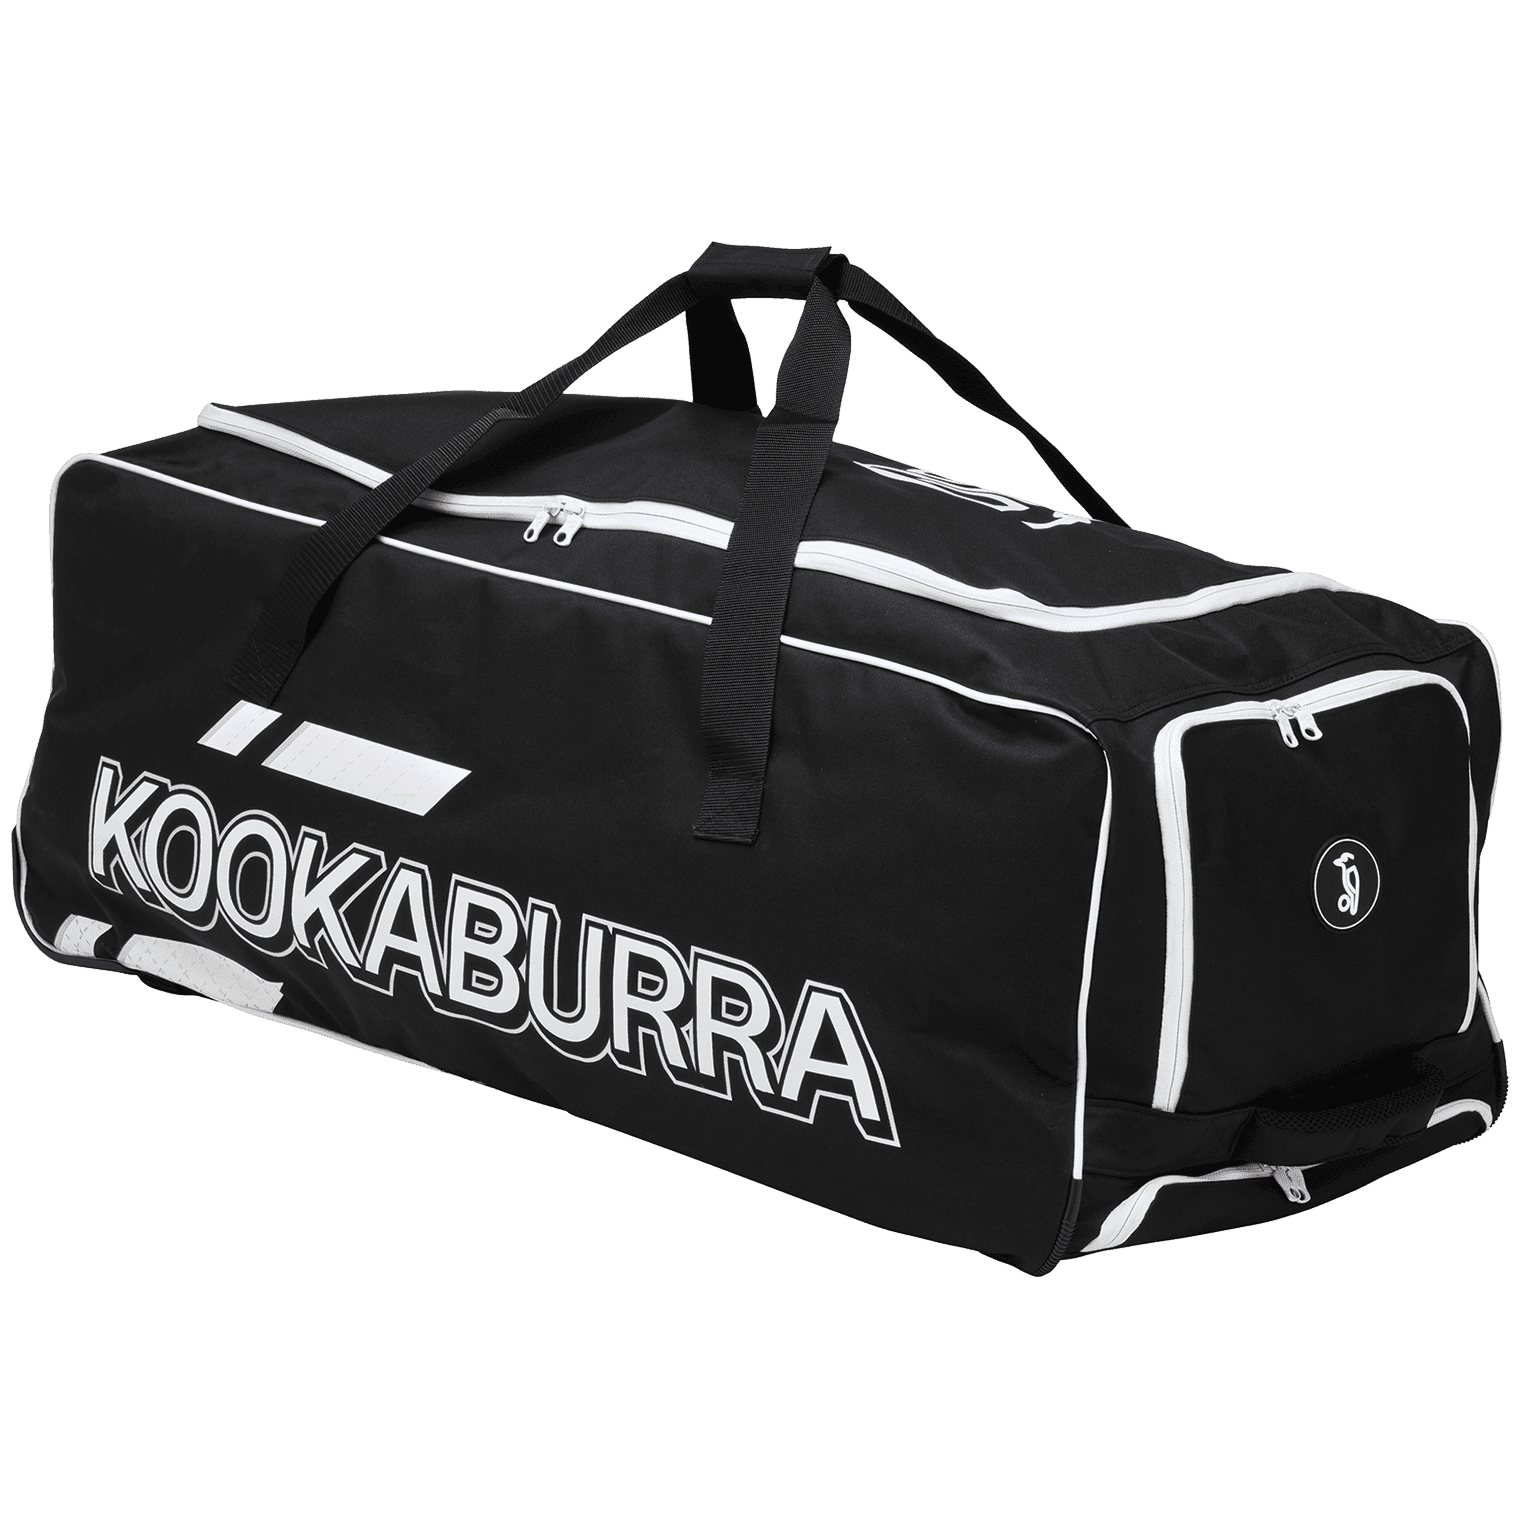 Kookaburra Cricket Bags White Kookaburra 2.0 Wheelie Cricket Bag